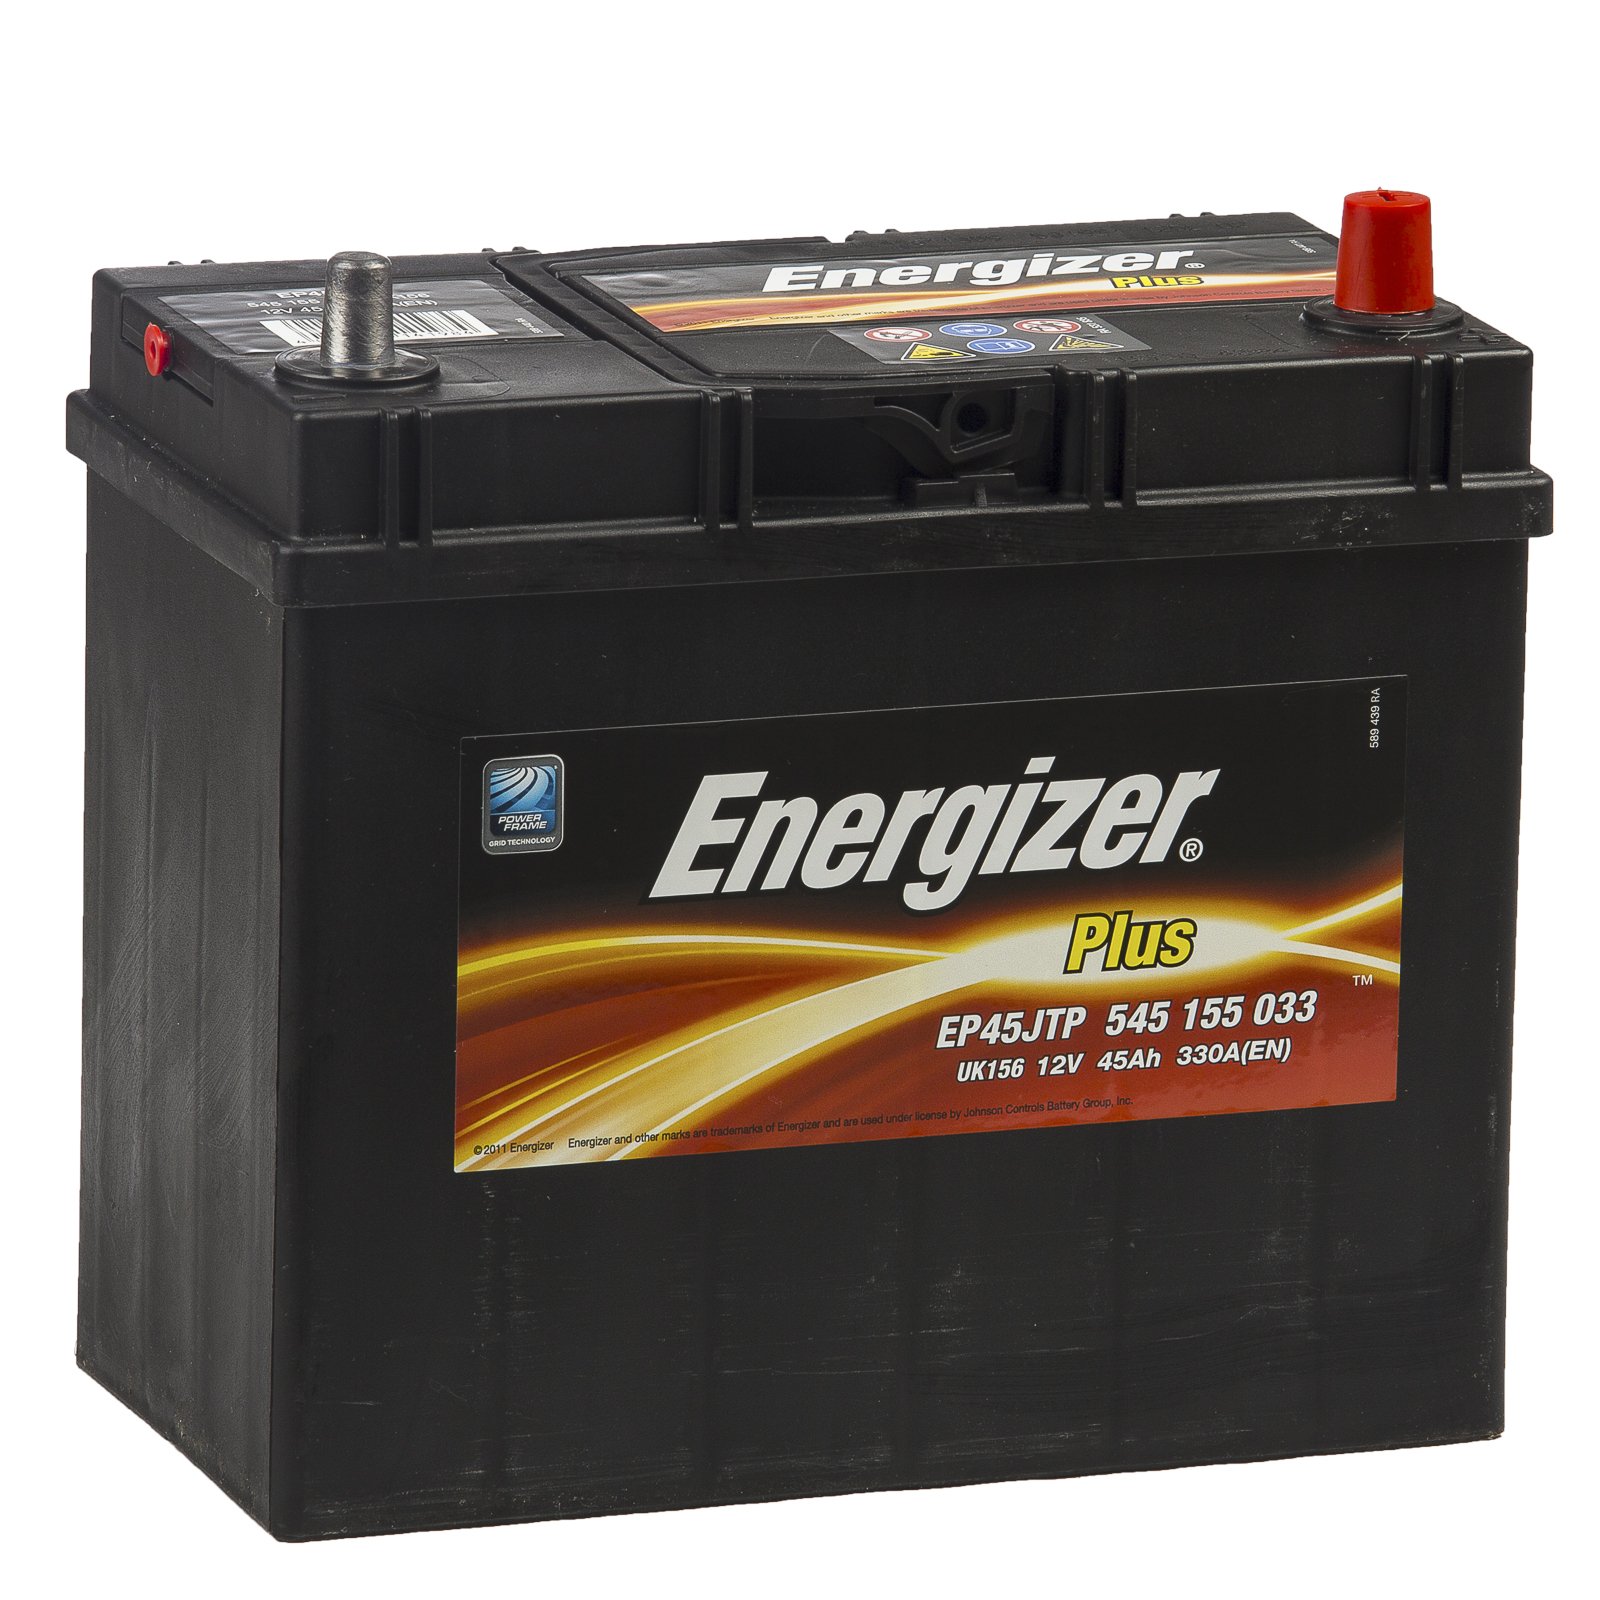 Energizer EP45J-TP Battery Energizer Plus 12V 45AH 330A(EN) R+ EP45JTP